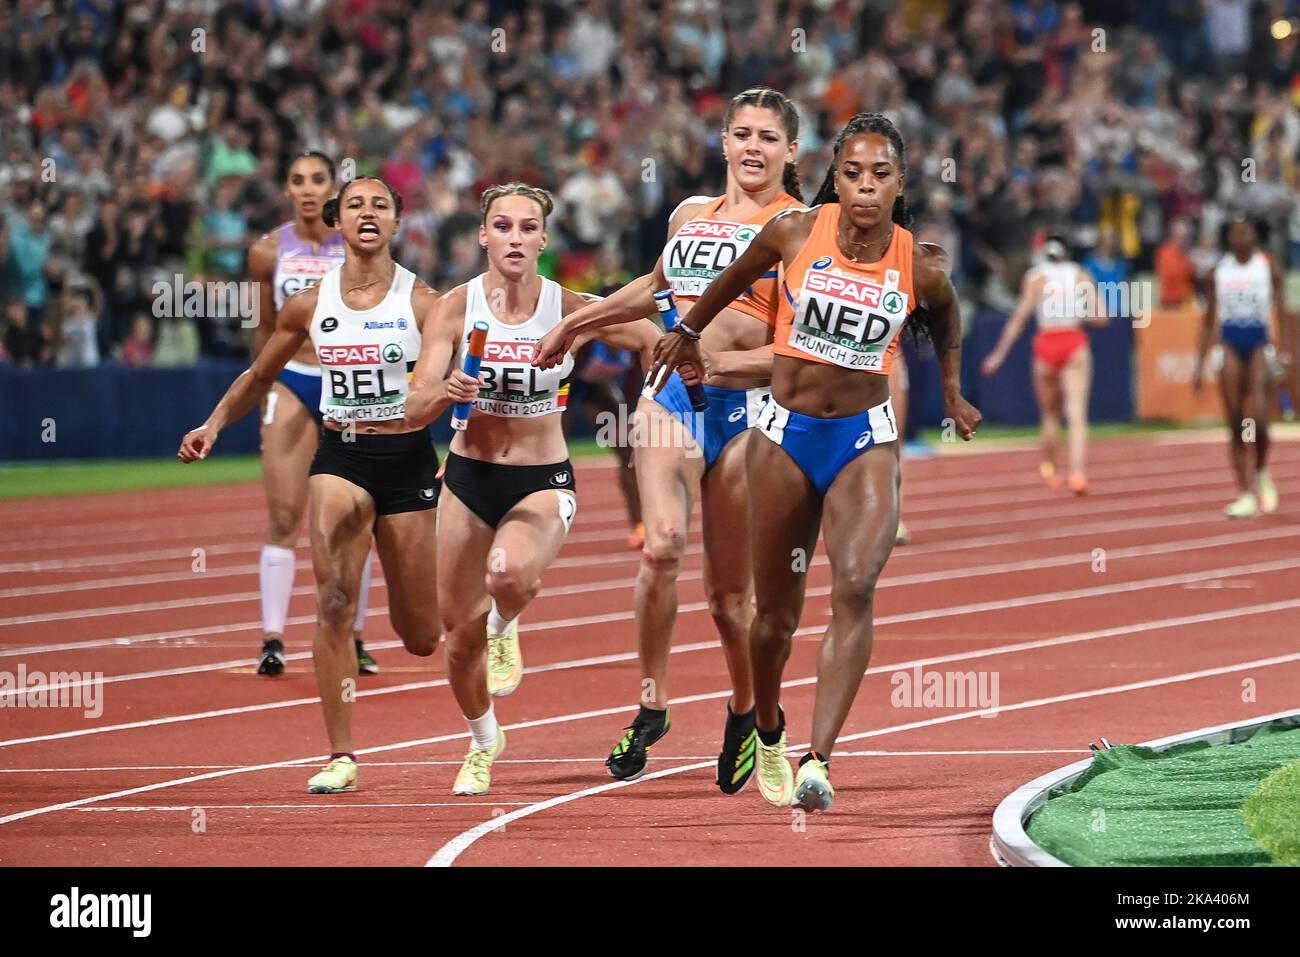 Netherlands: 4x100 relay race women. Jamile Samuel and Zoe Sedney. European Championships Munich 2022 Stock Photo